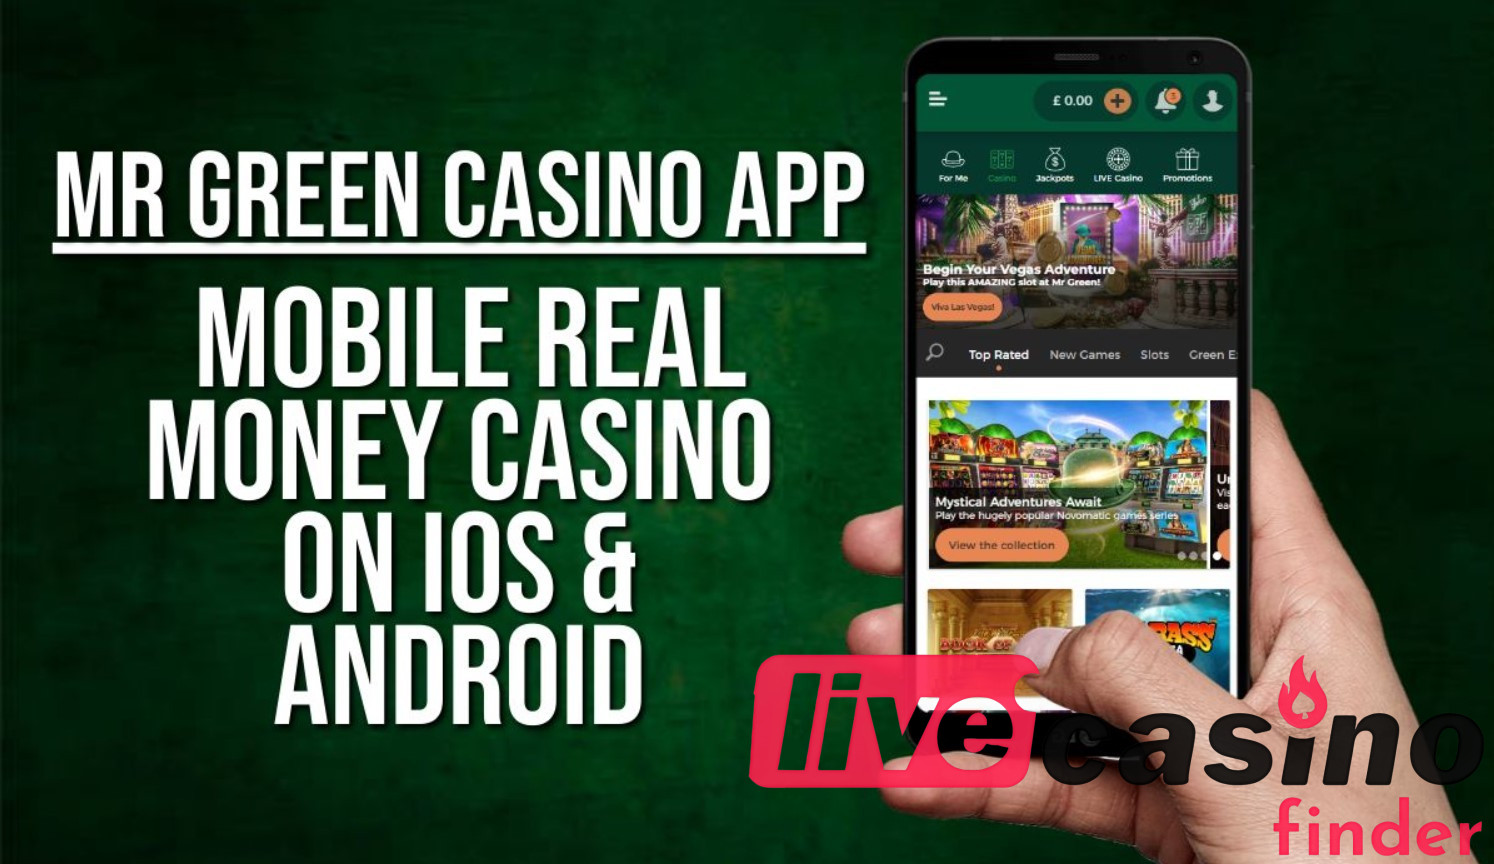 Aplicación móvil de casino en vivo Mr. Green.